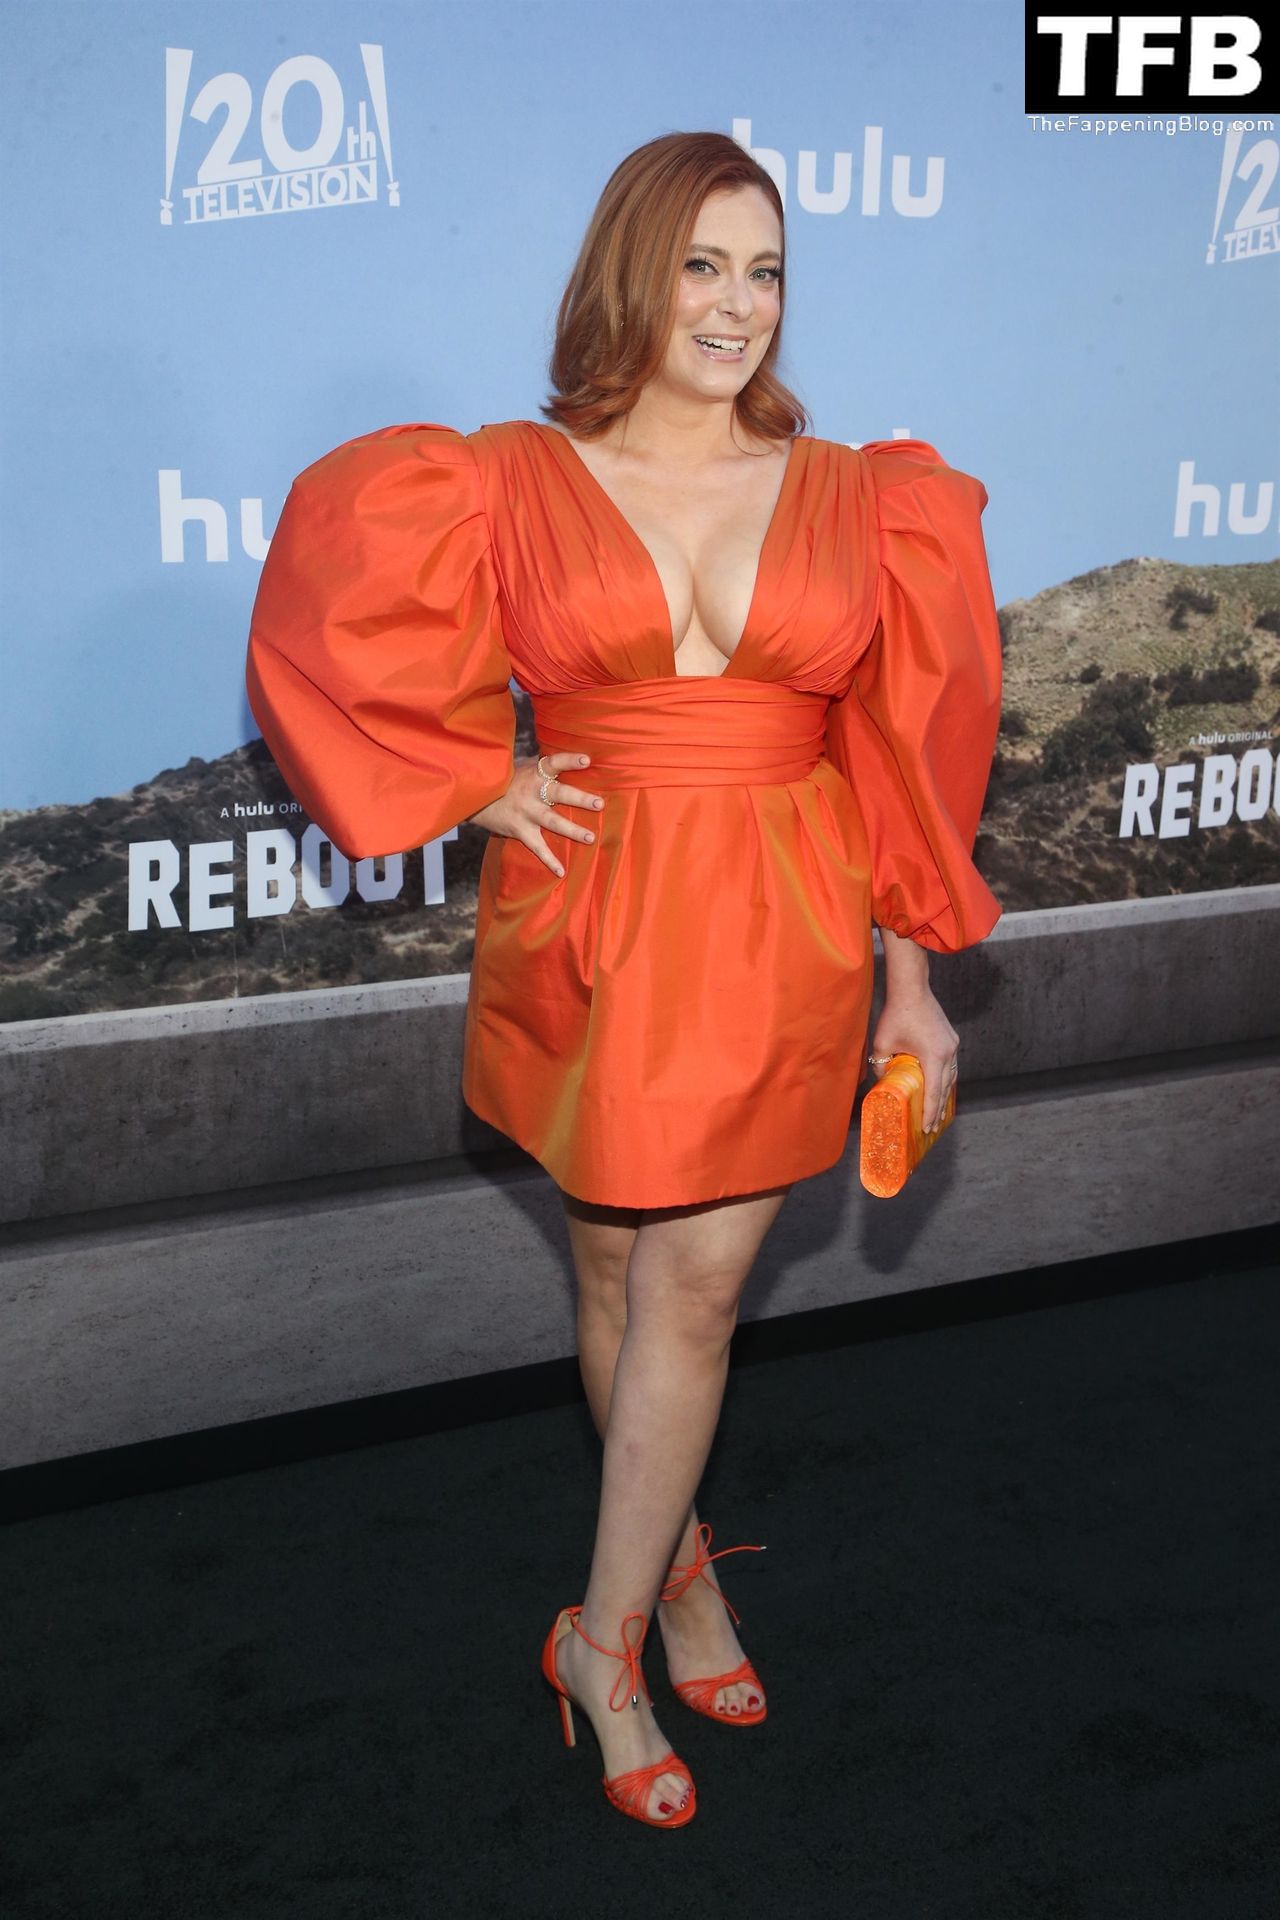 Rachel Bloom Displays Her Sexy Tits at the “Reboot” Premiere in LA (33 Photos)